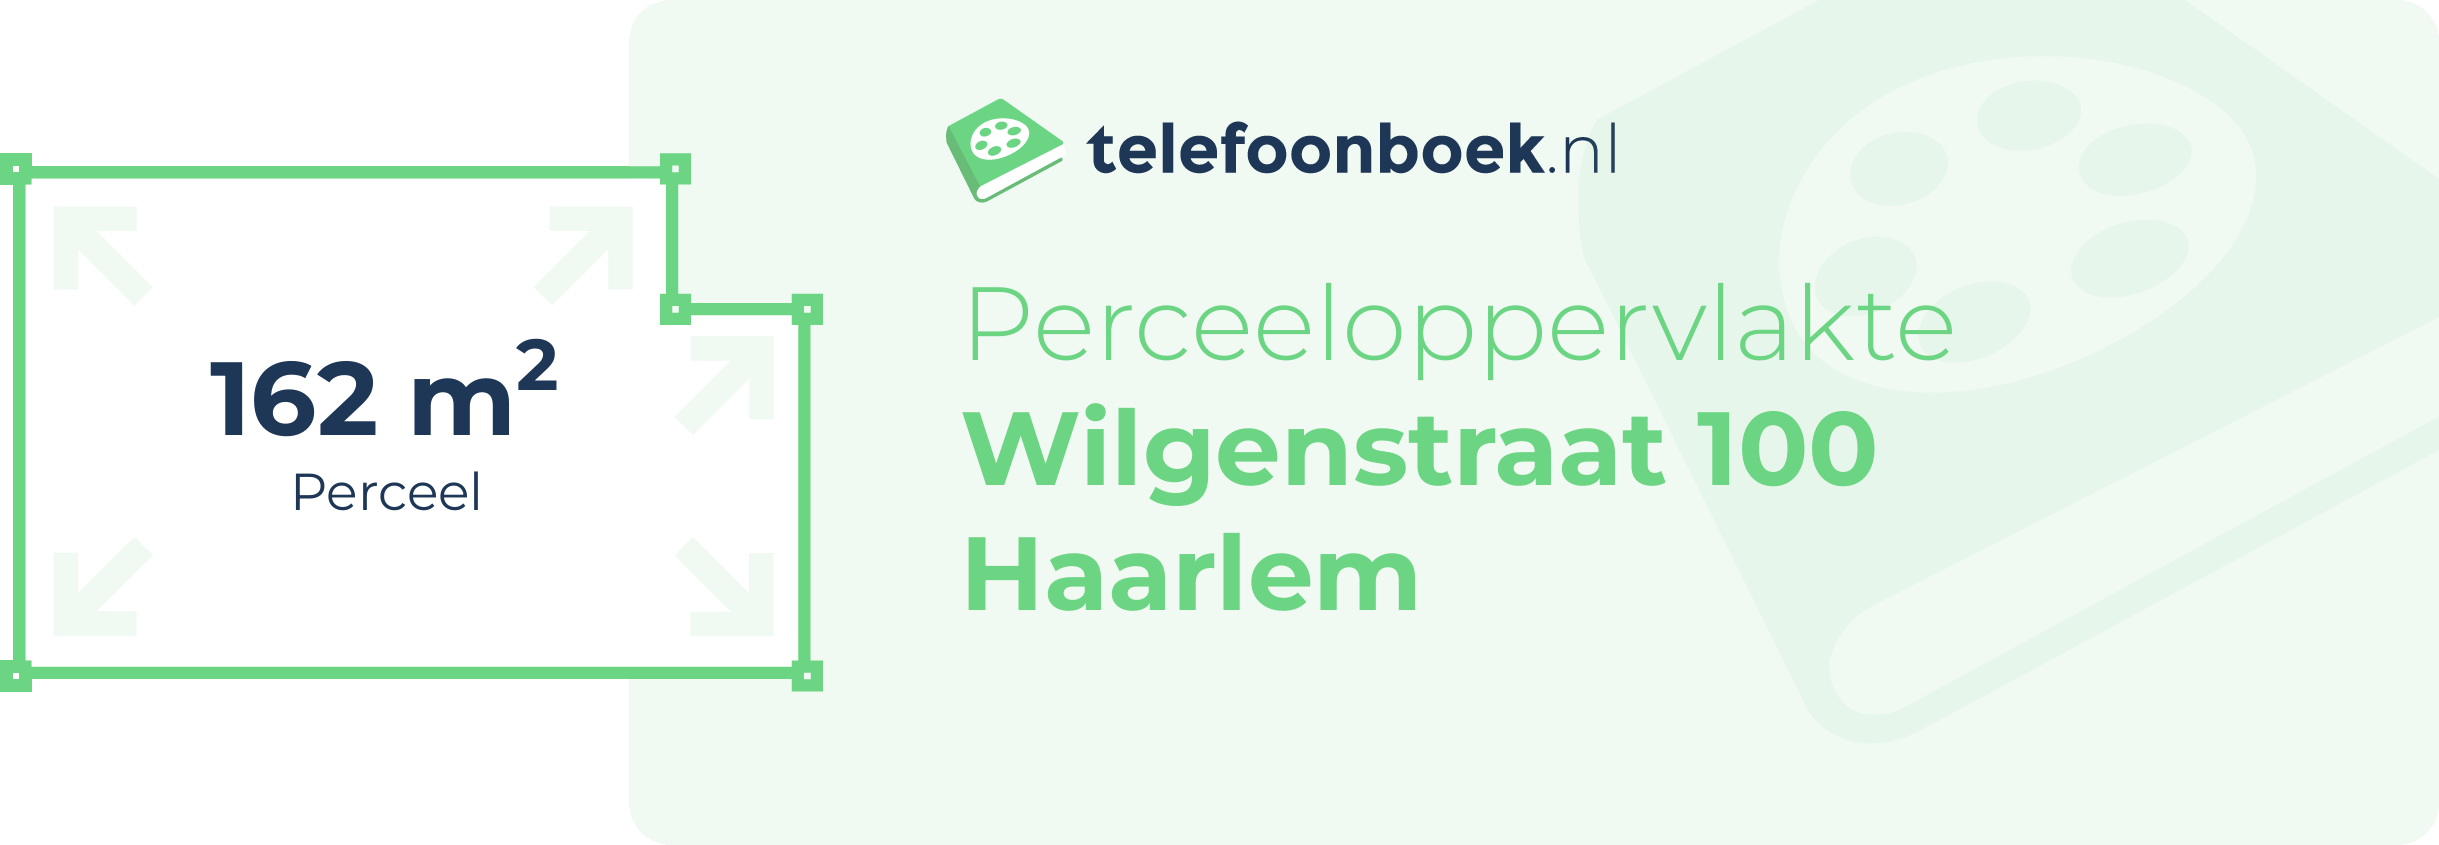 Perceeloppervlakte Wilgenstraat 100 Haarlem